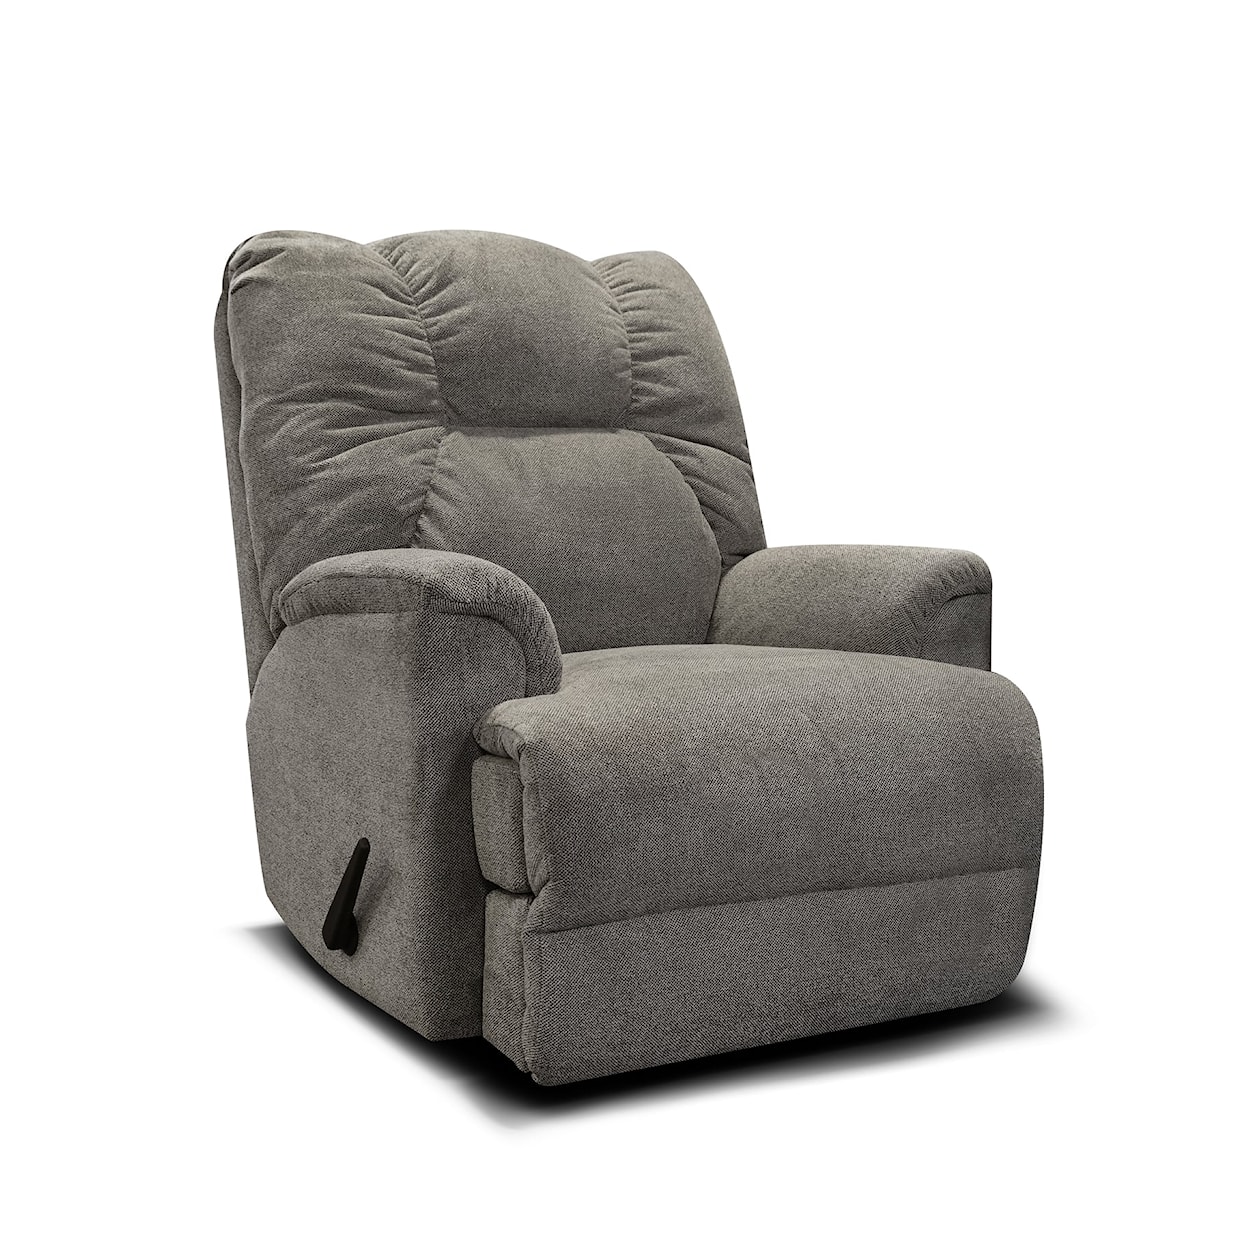 Tennessee Custom Upholstery EZ5W00 Series Recliner